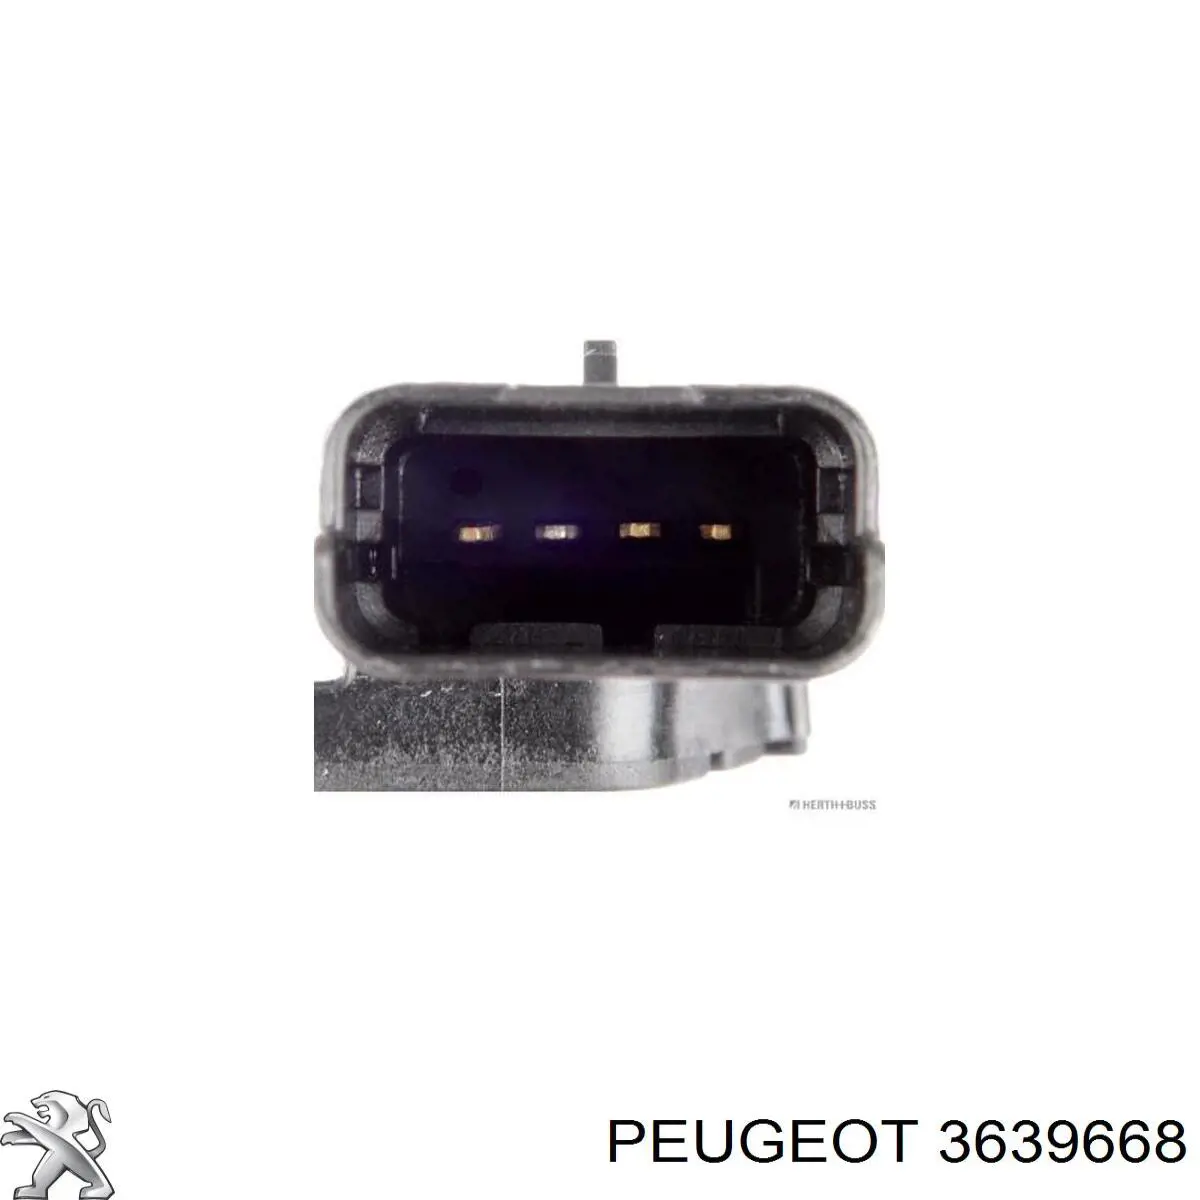 Sensor De Flujo De Aire/Medidor De Flujo (Flujo de Aire Masibo) 3639668 Peugeot/Citroen